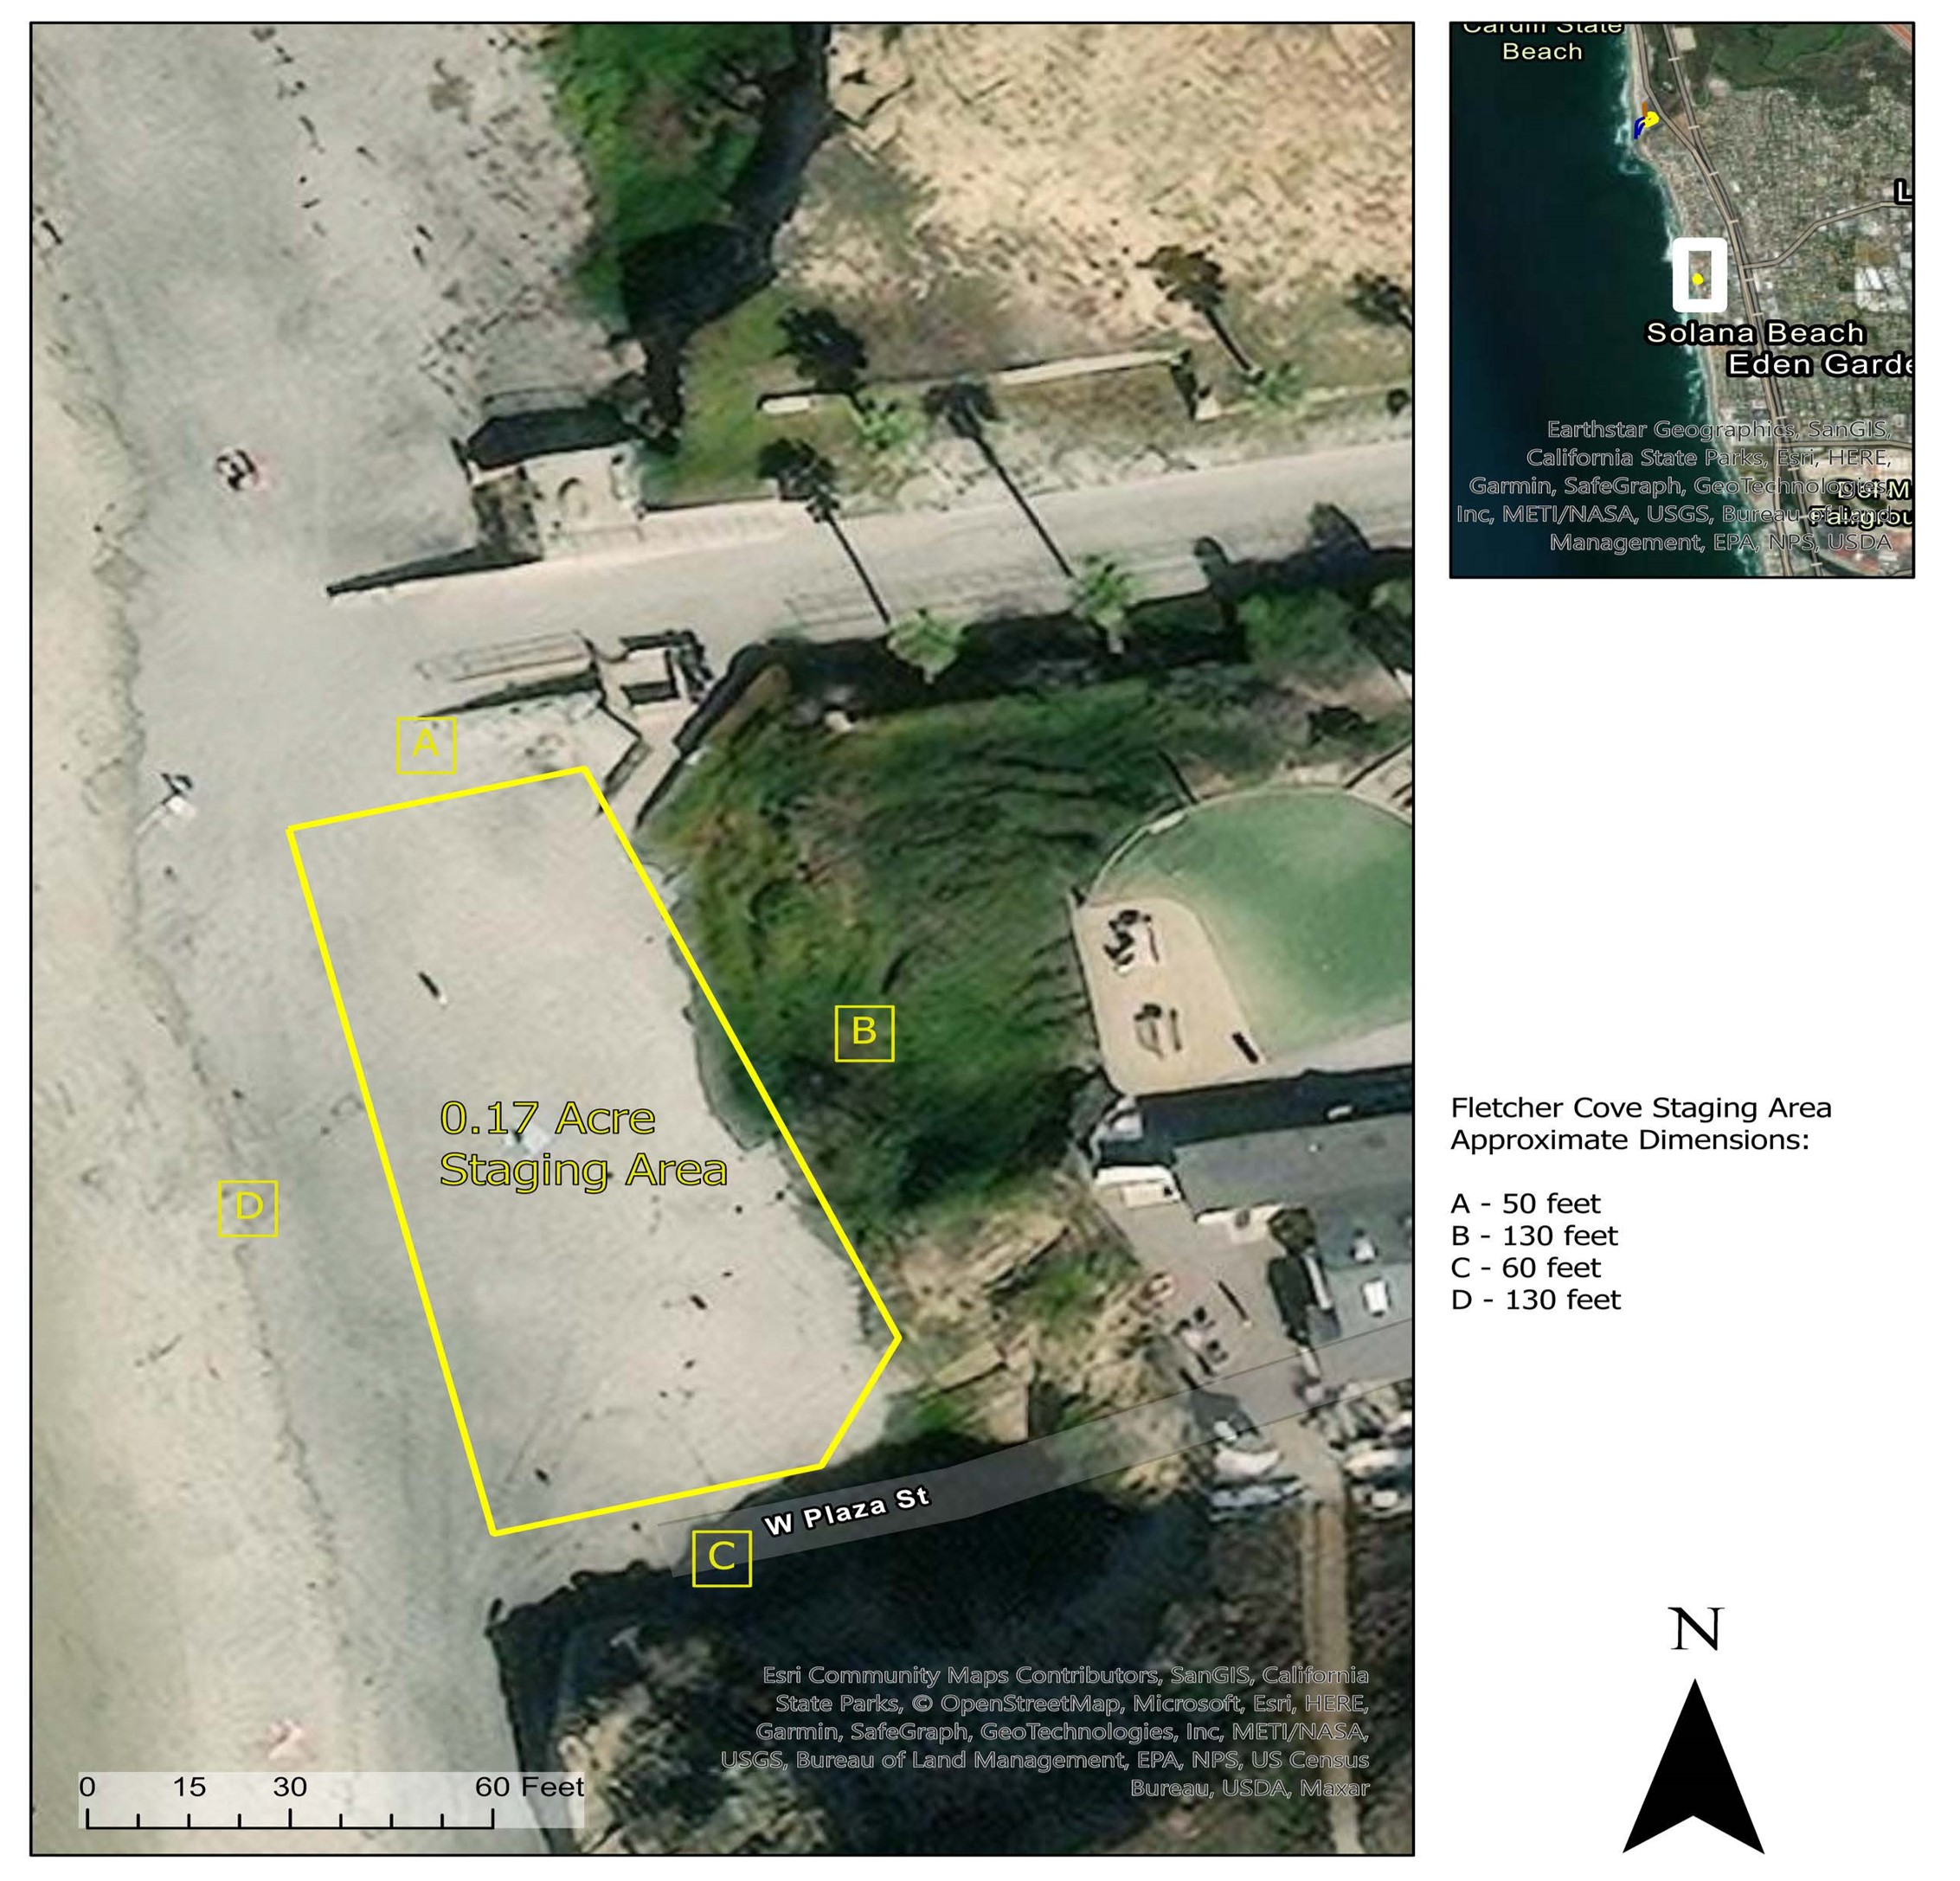 Solana Beach Sand Replenishment Project Begins – FOX 5 San Diego